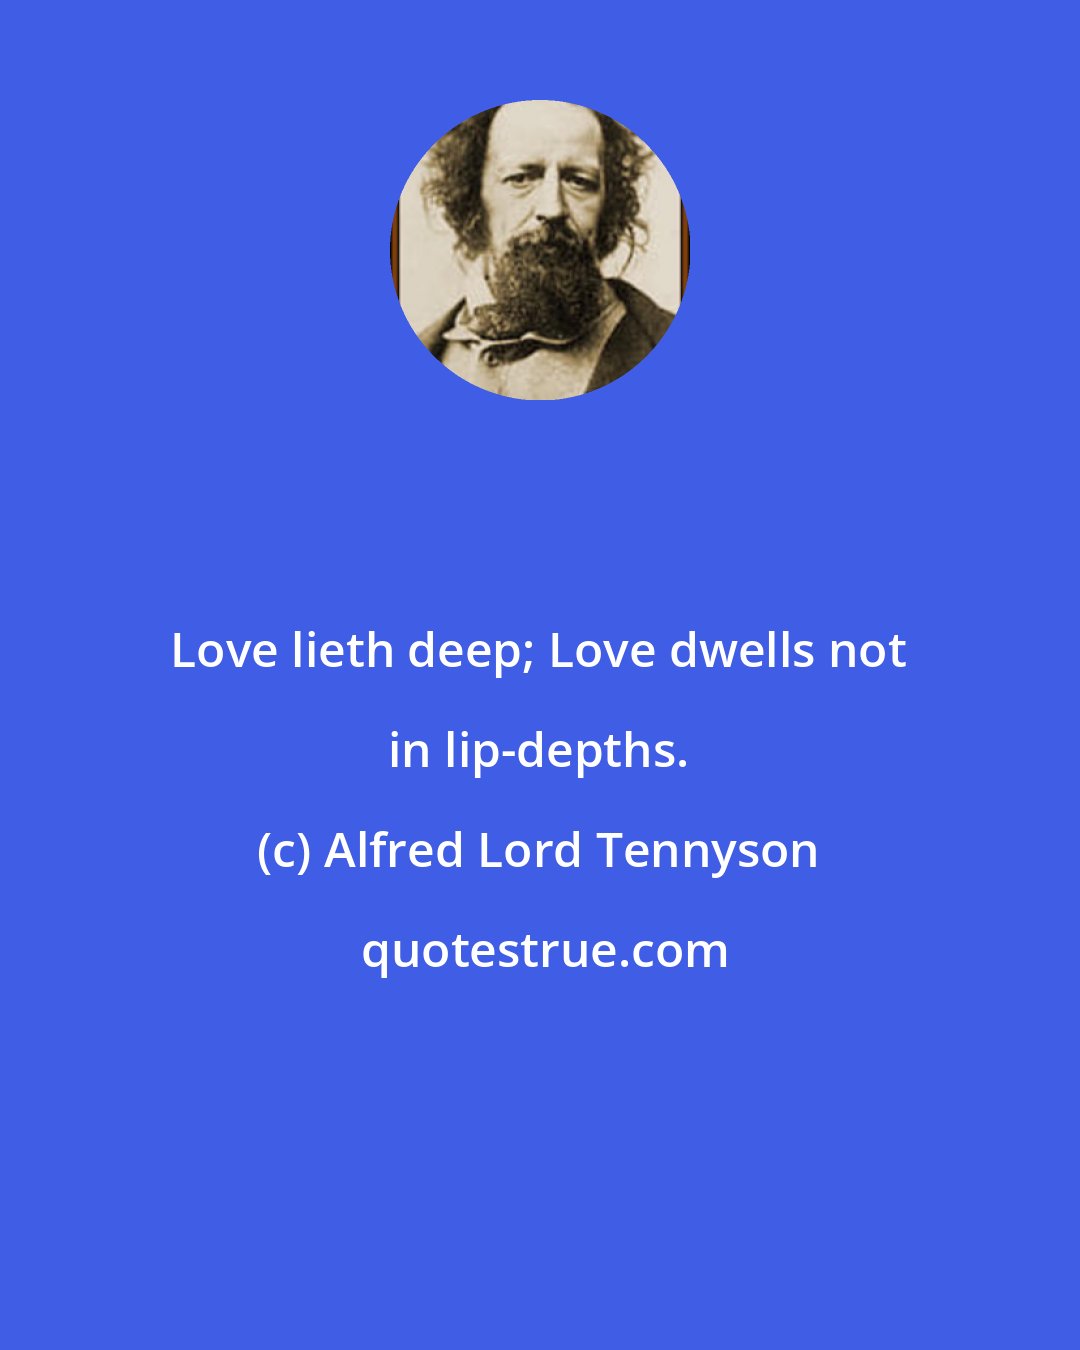 Alfred Lord Tennyson: Love lieth deep; Love dwells not in lip-depths.